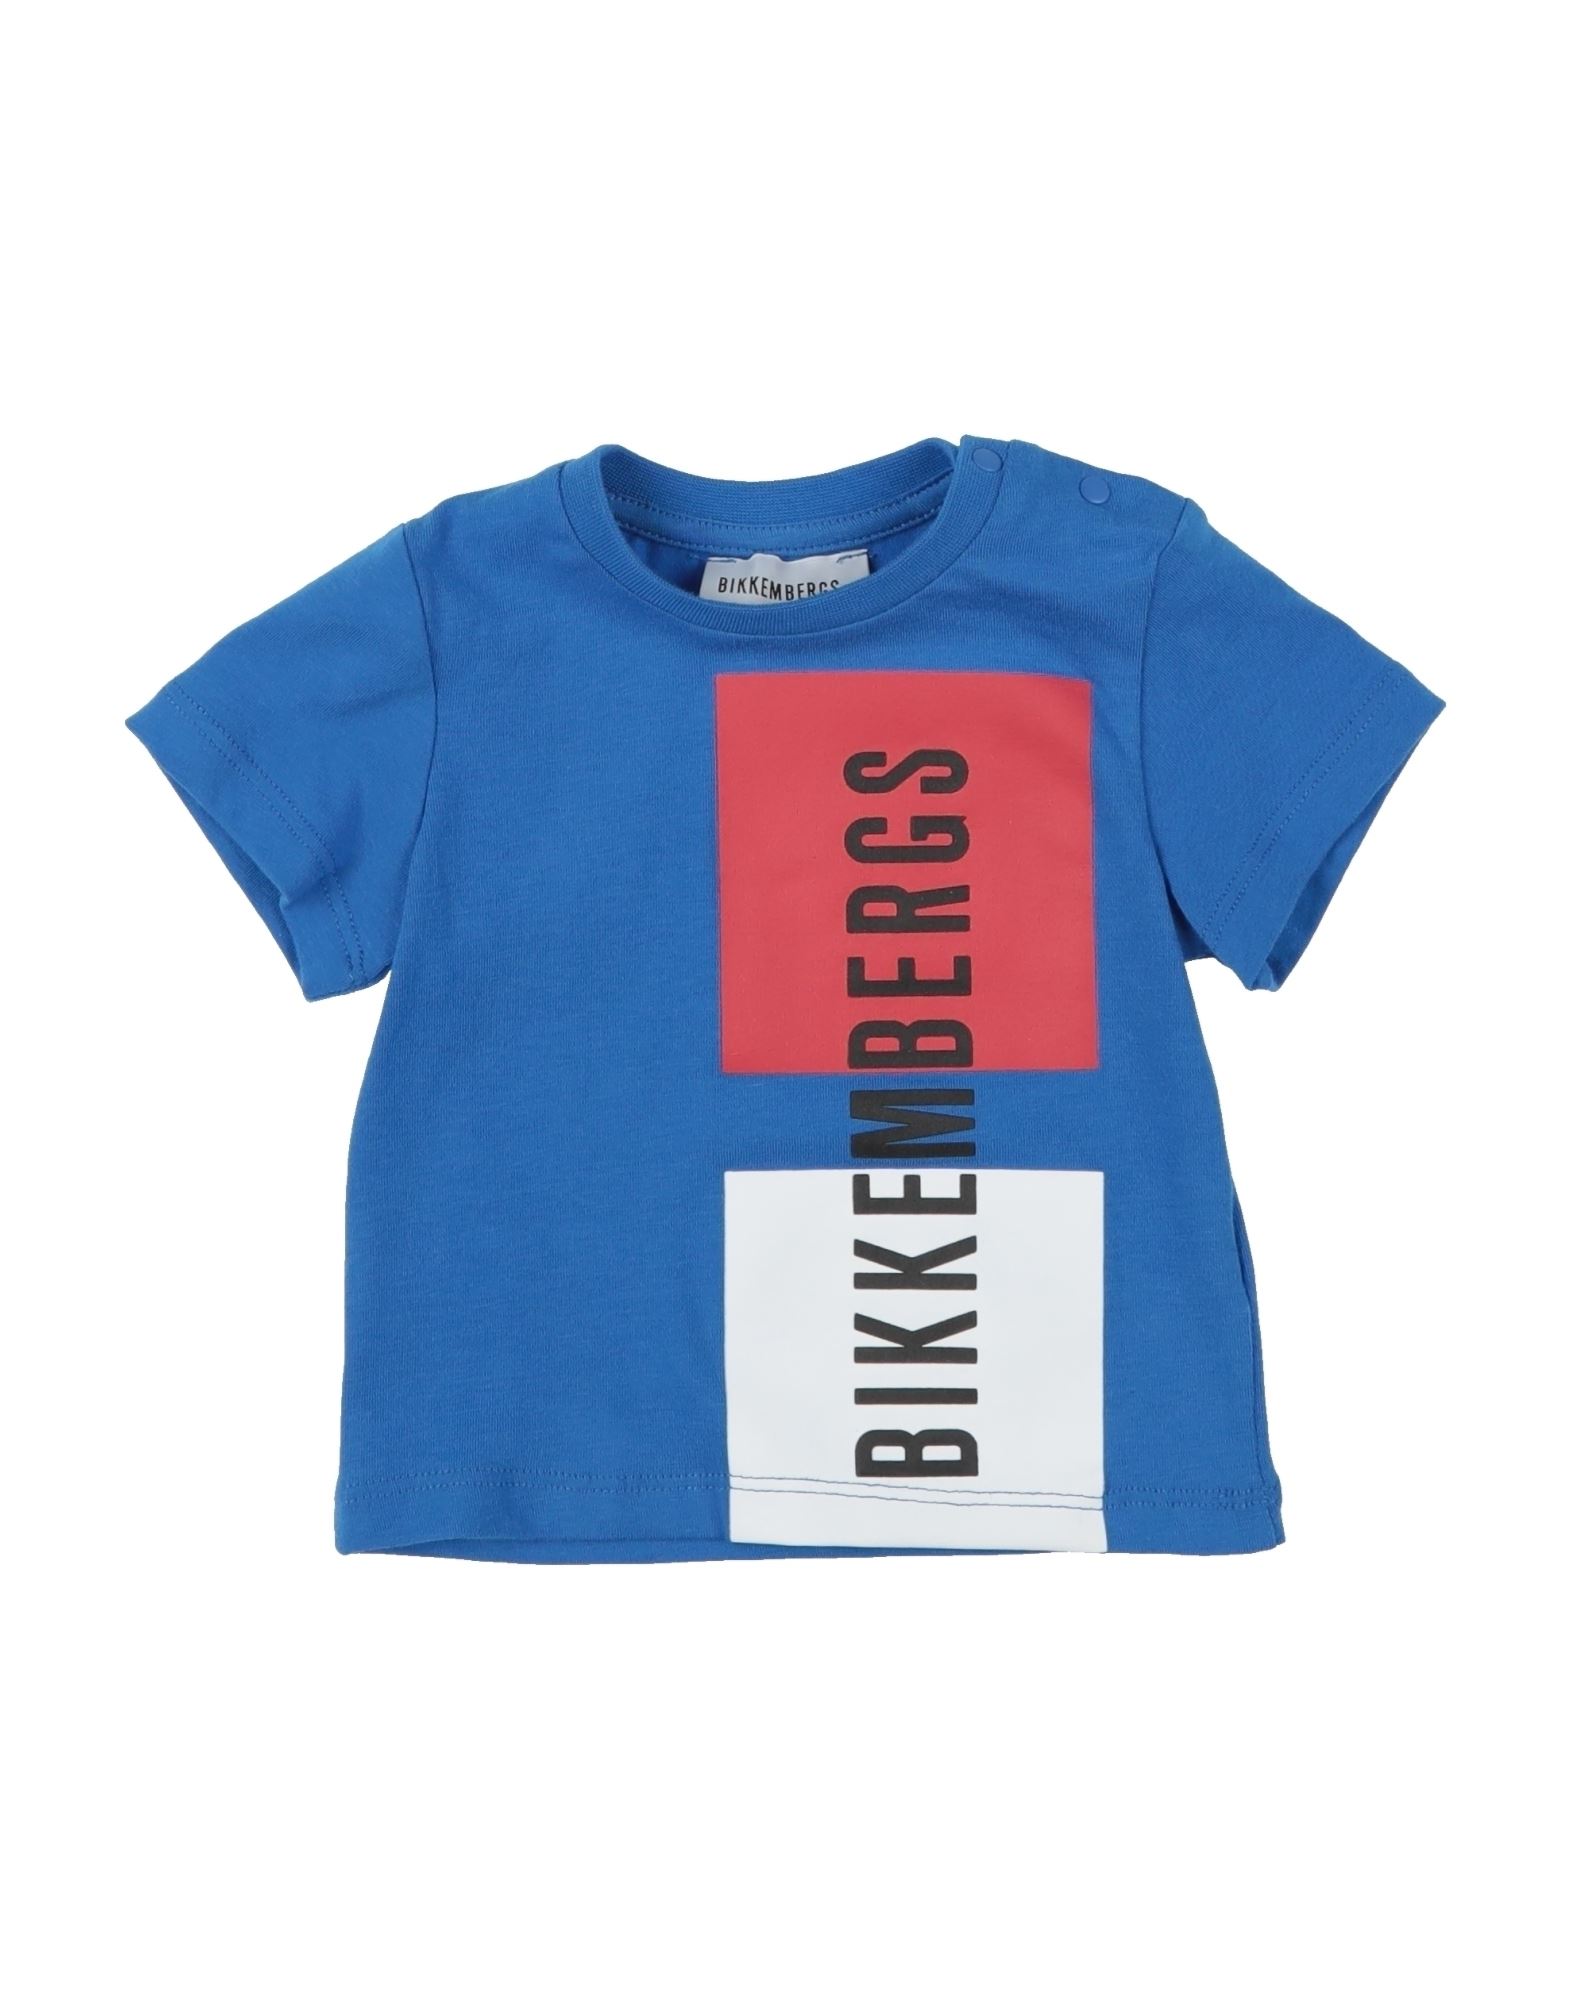 BIKKEMBERGS T-shirts Kinder Blau von BIKKEMBERGS